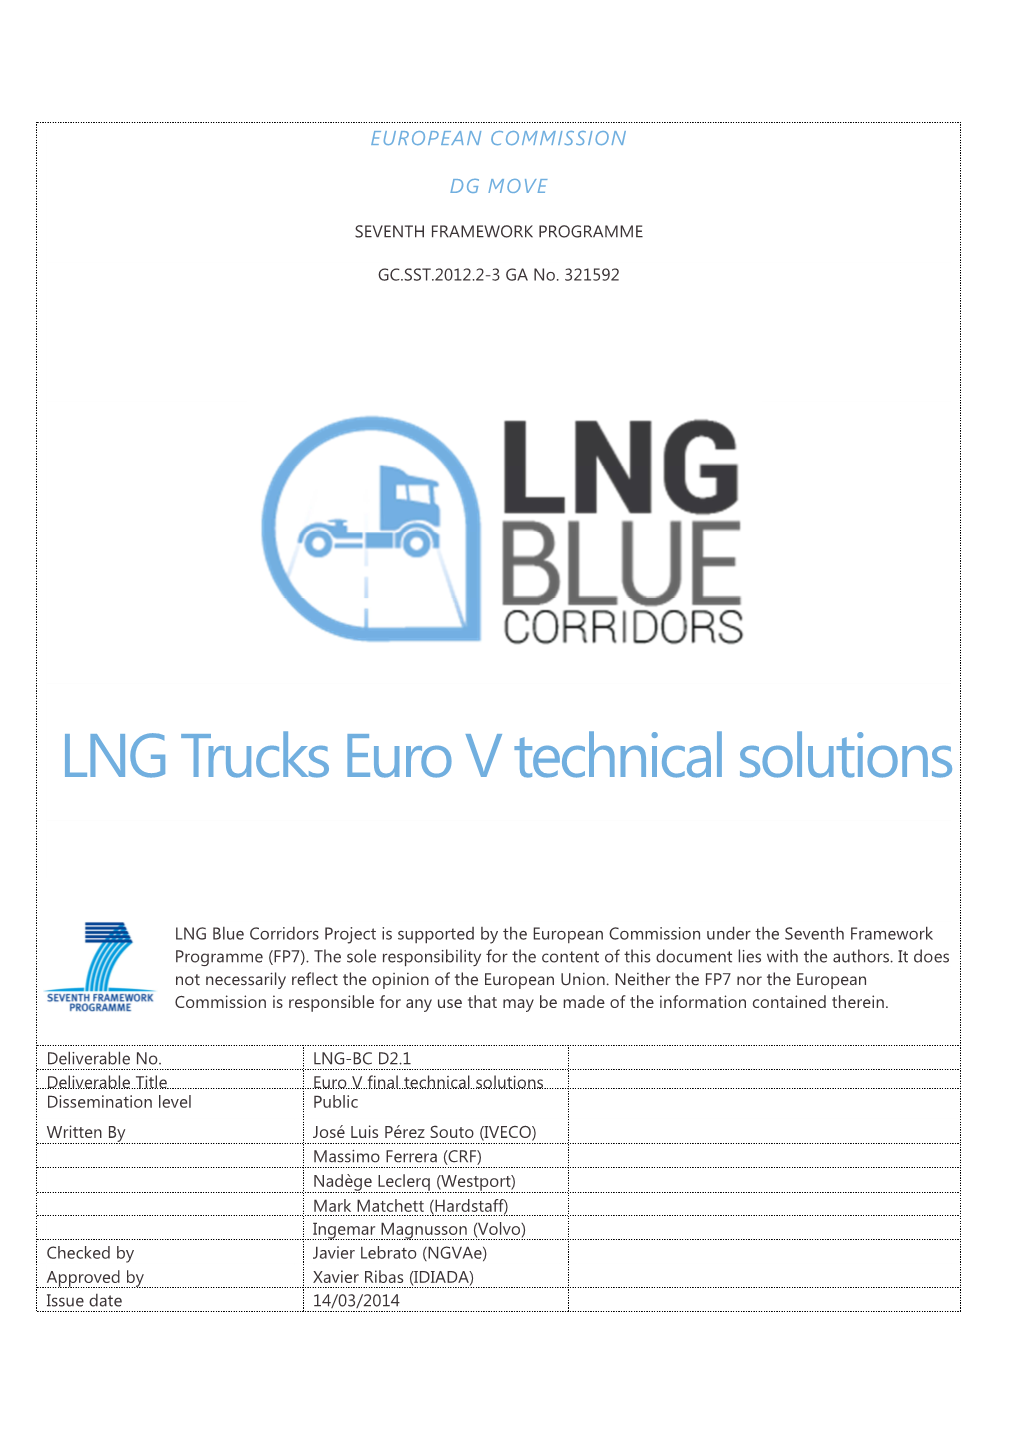 LNG Trucks Euro V Technical Solutions